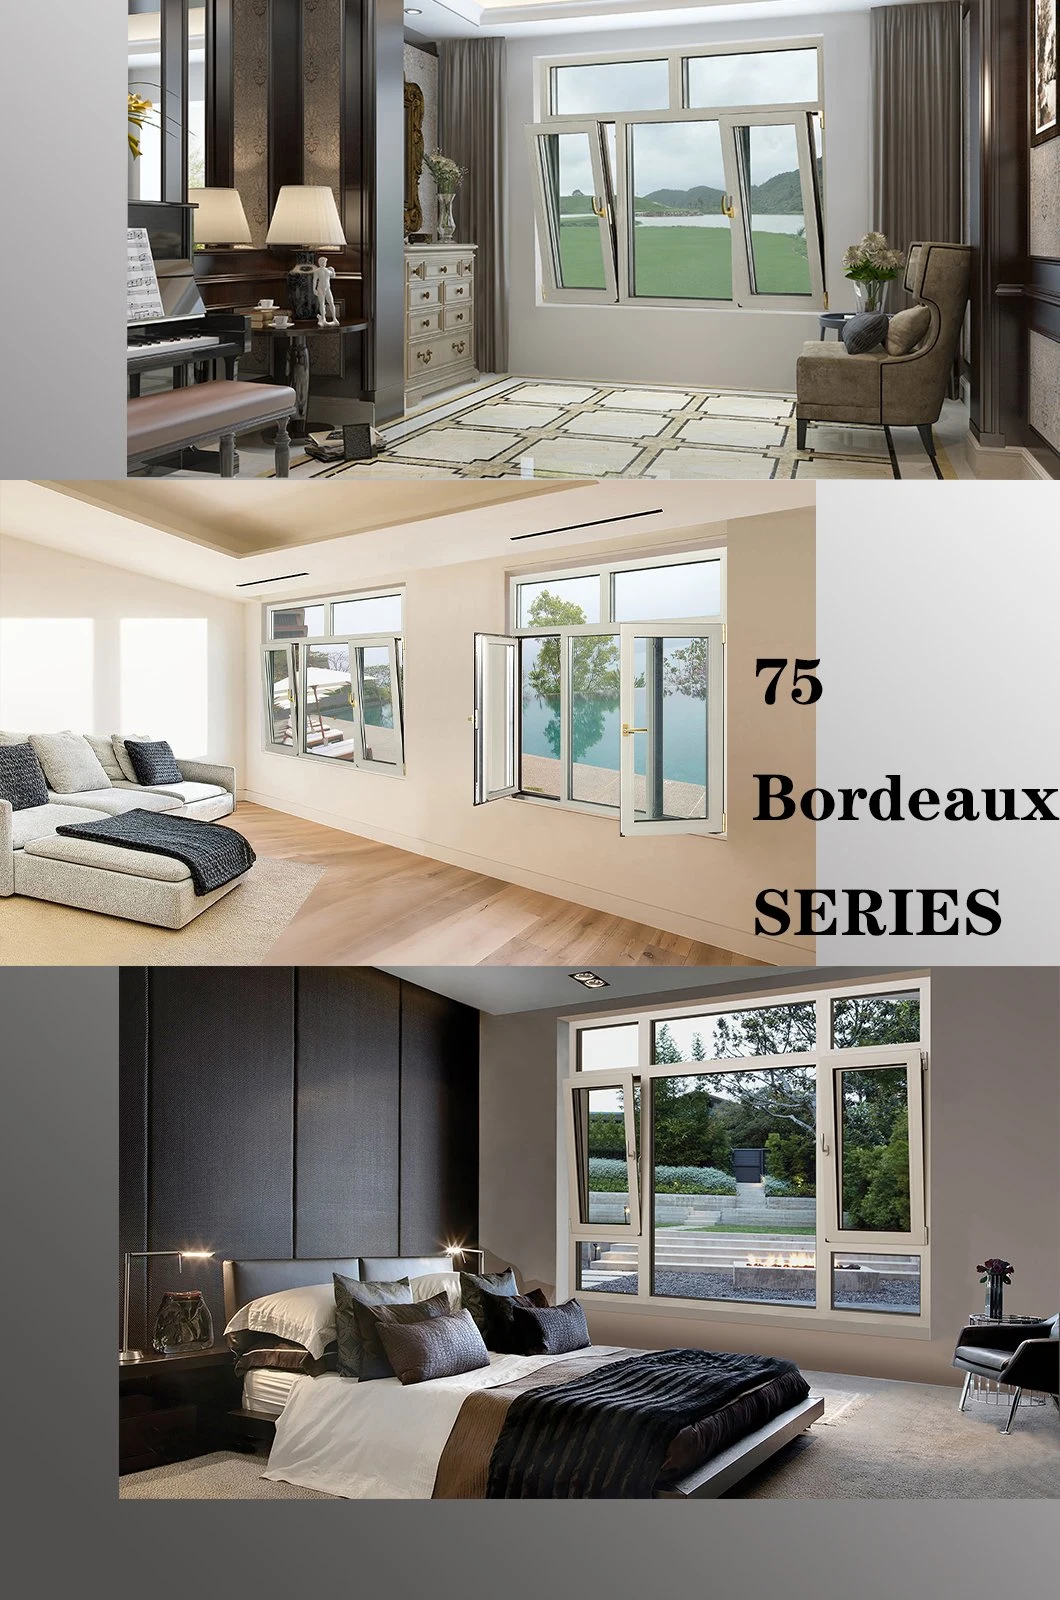 Building Materials Residential Double-Glazed Indoor Aluminum Aluminum Profile Casement Windows with Built-in Shutters